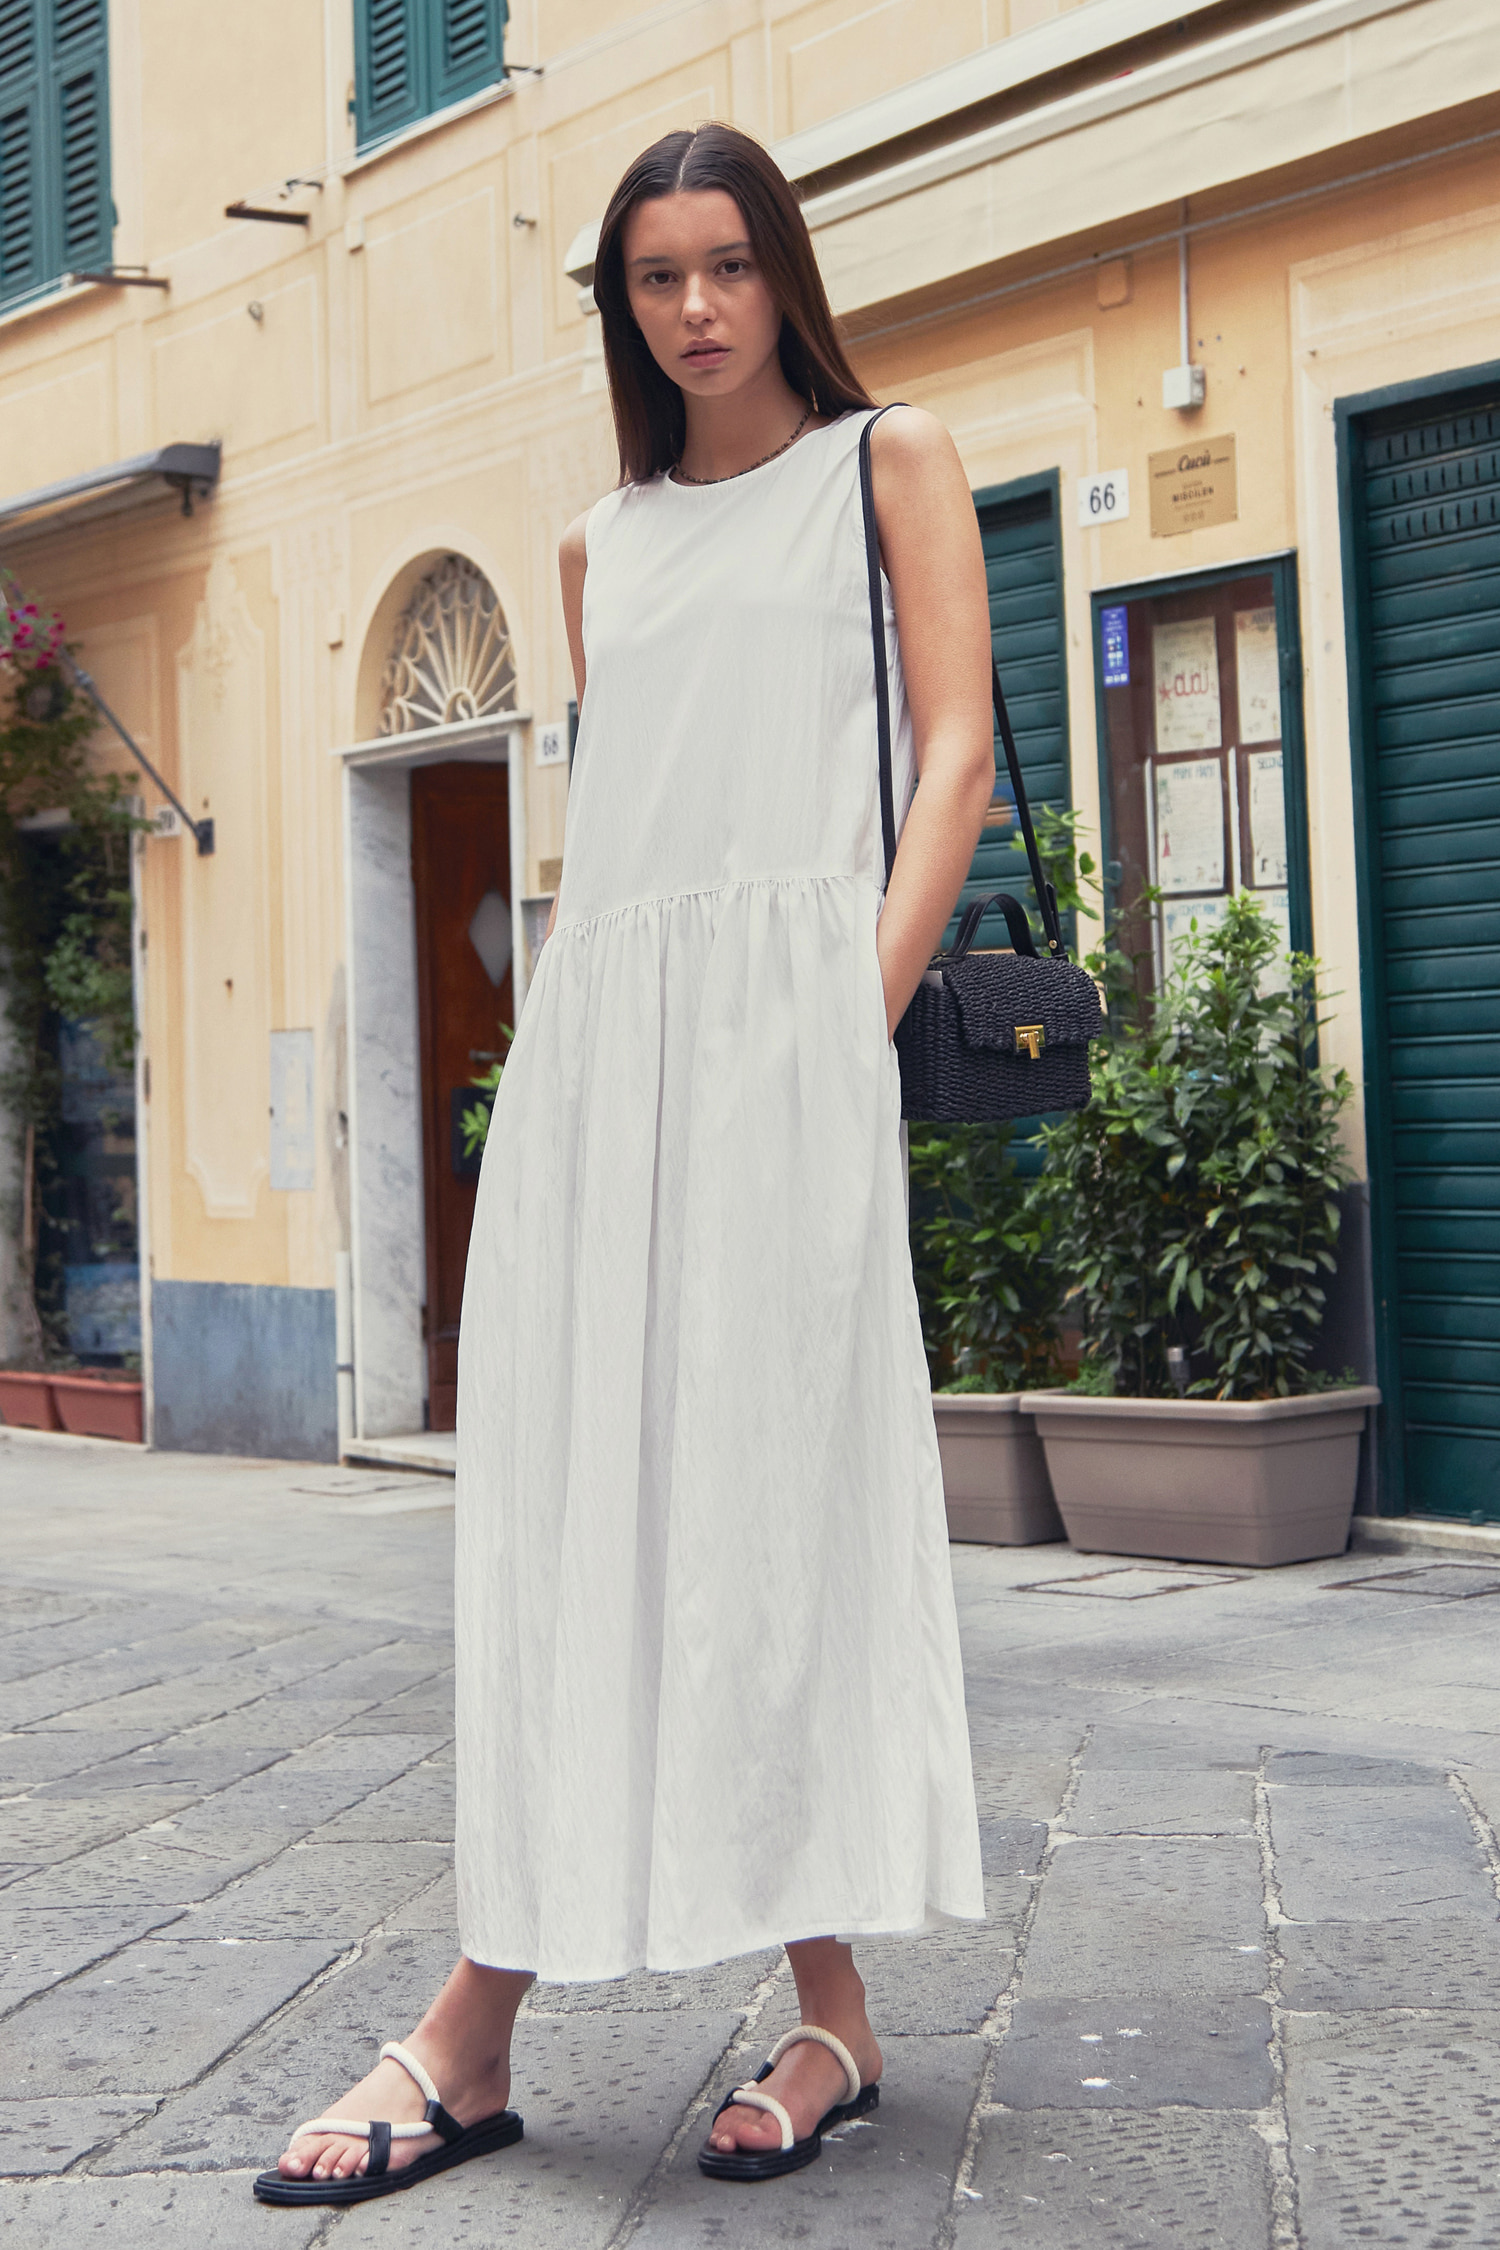 Pure sleeveless dress - White